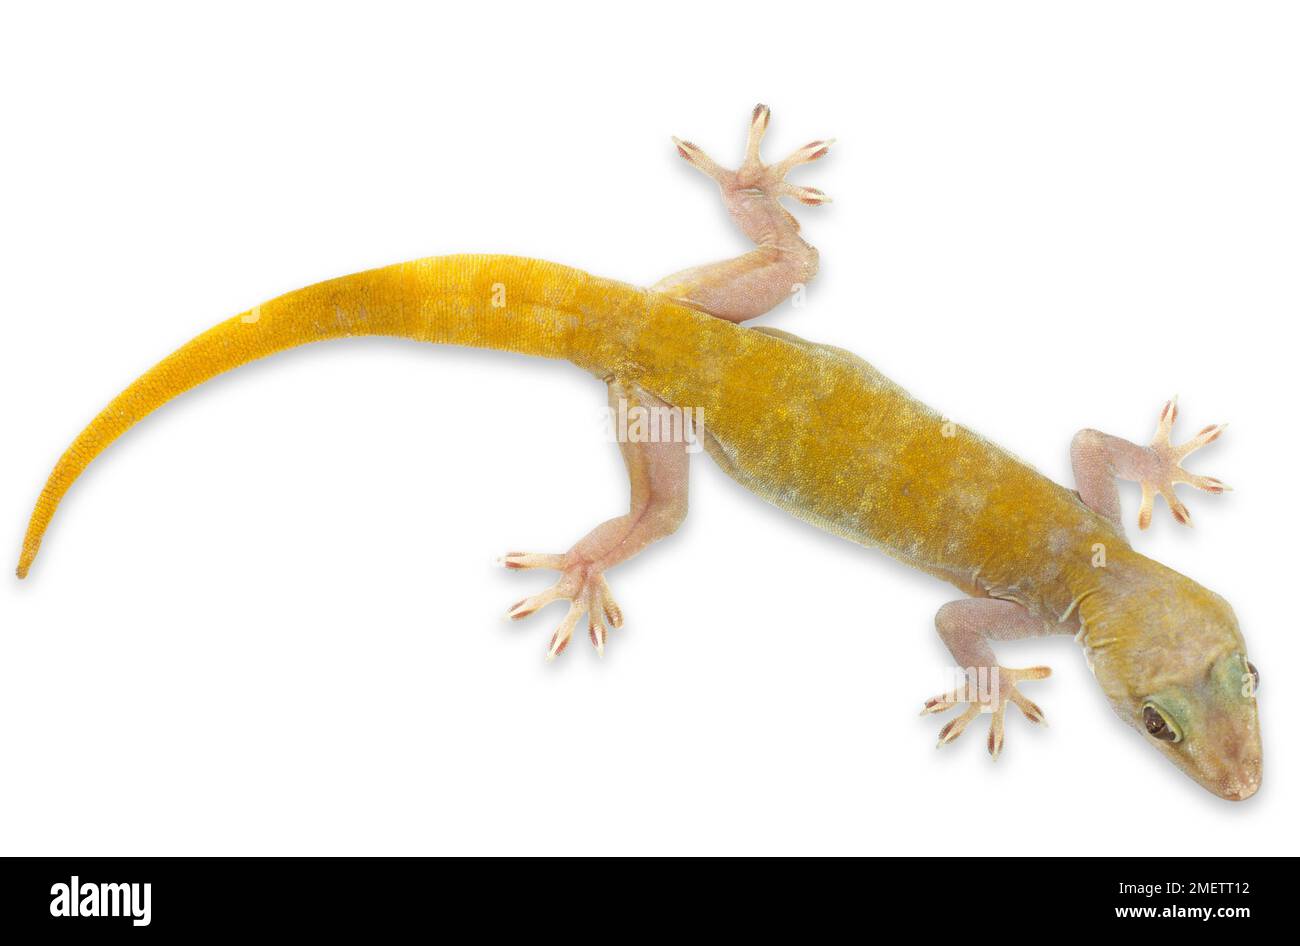 Golden Gecko (Gekko badenii) Stock Photo